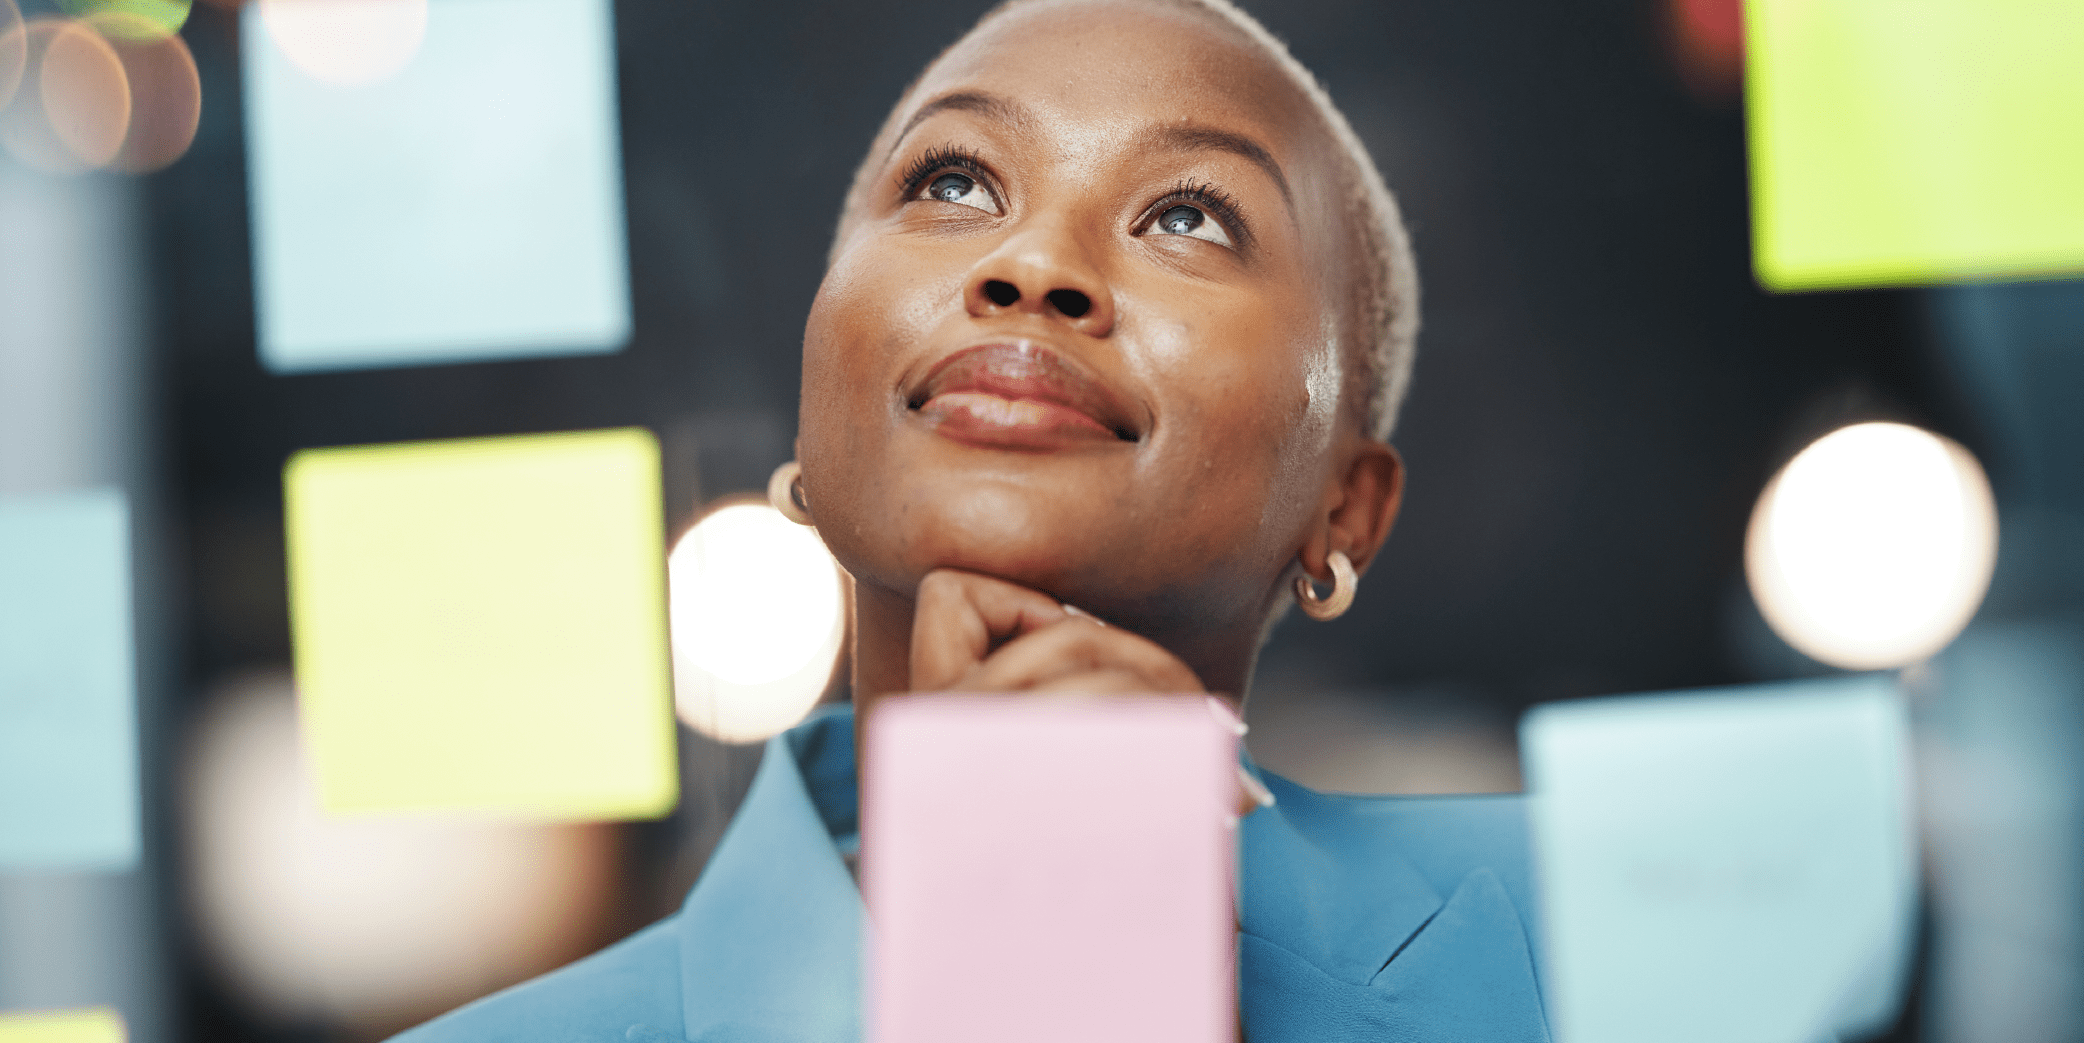 Woman leader considering professional development